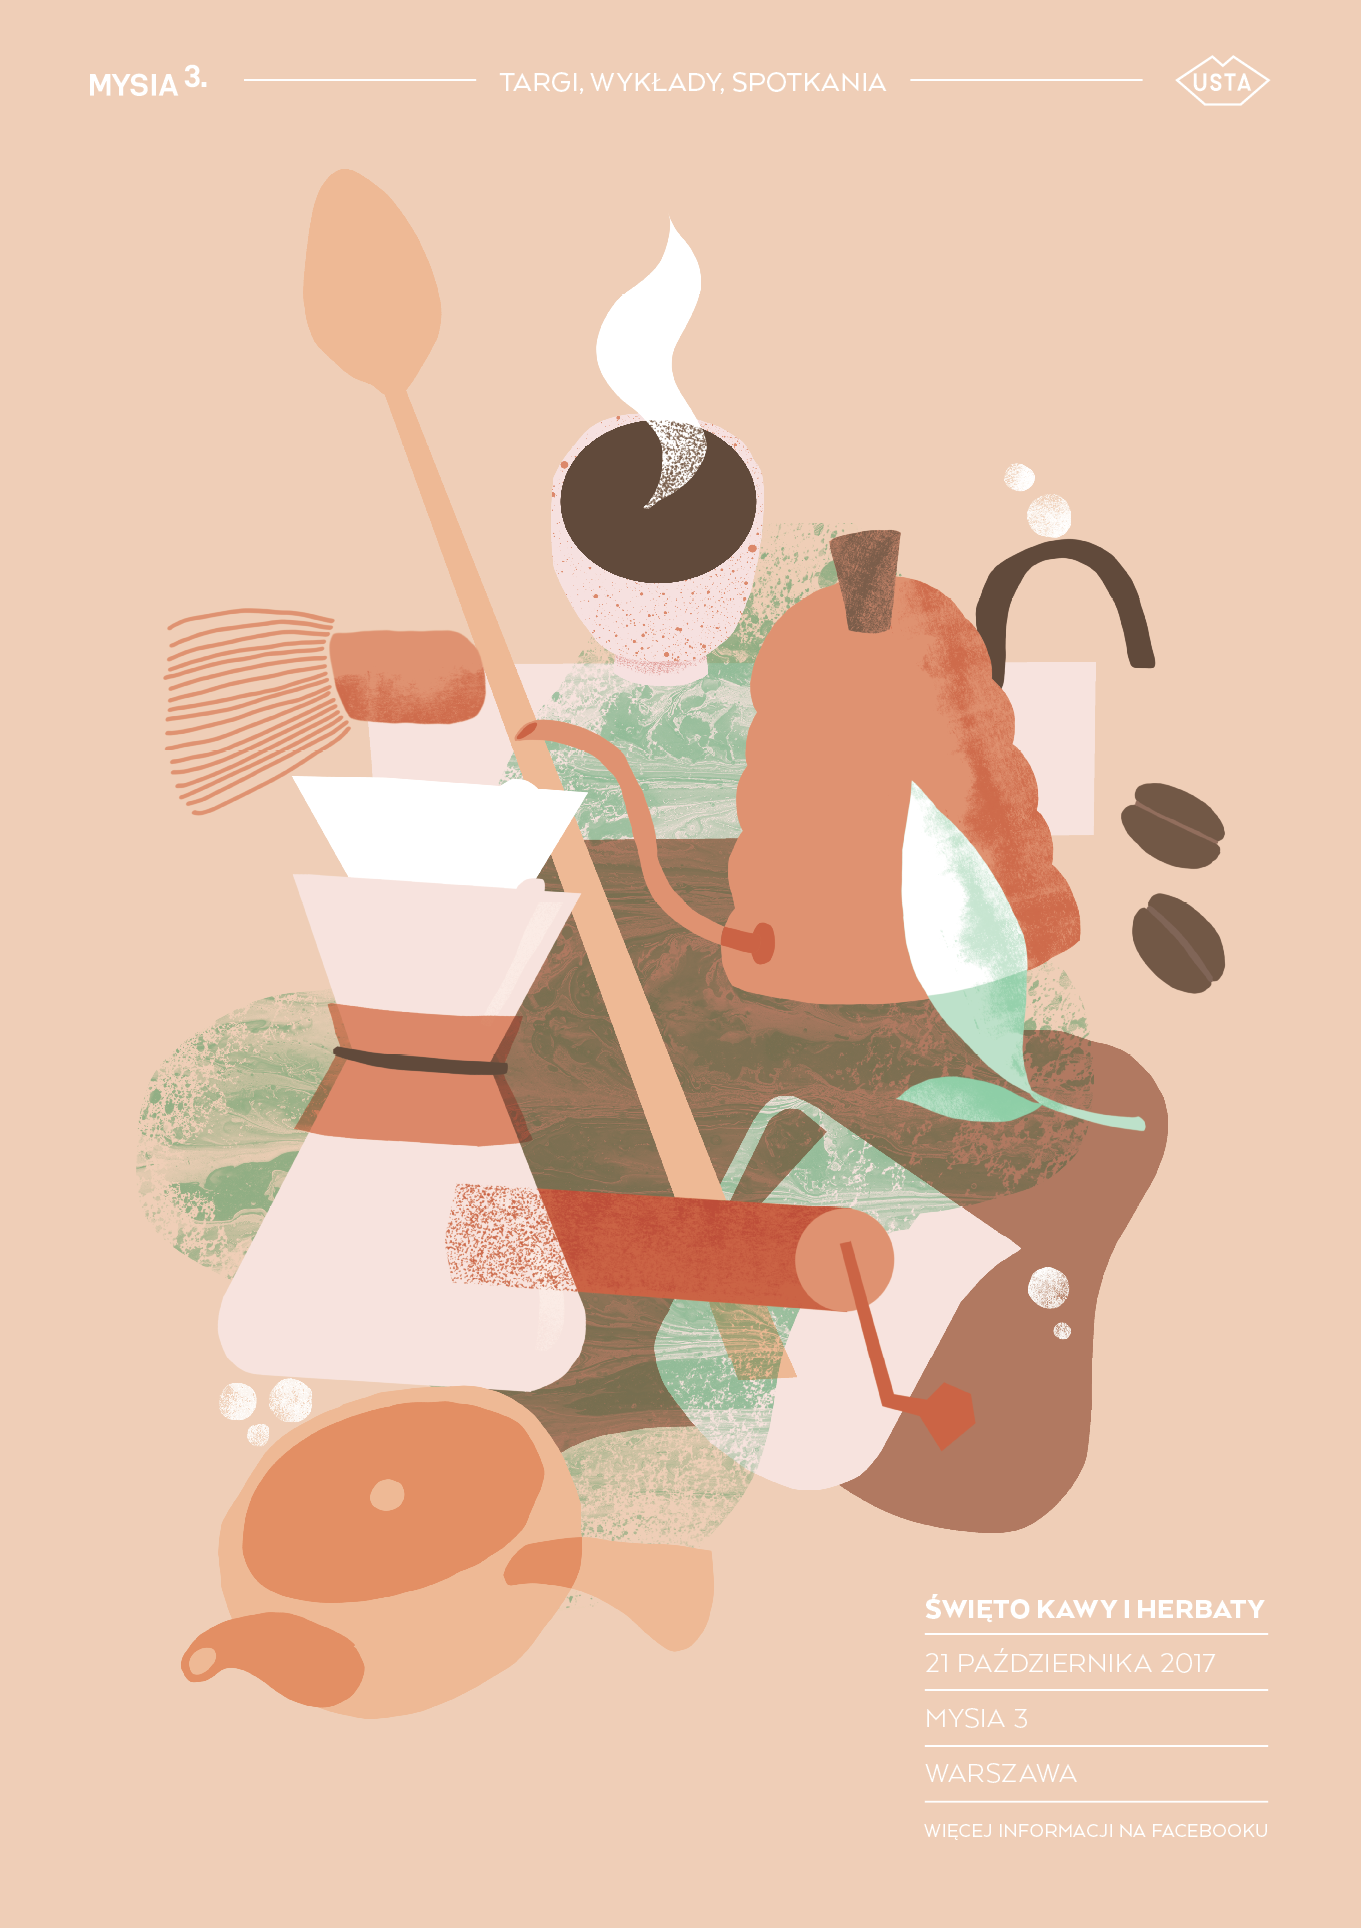 COFFE, TEA AND CERAMICS